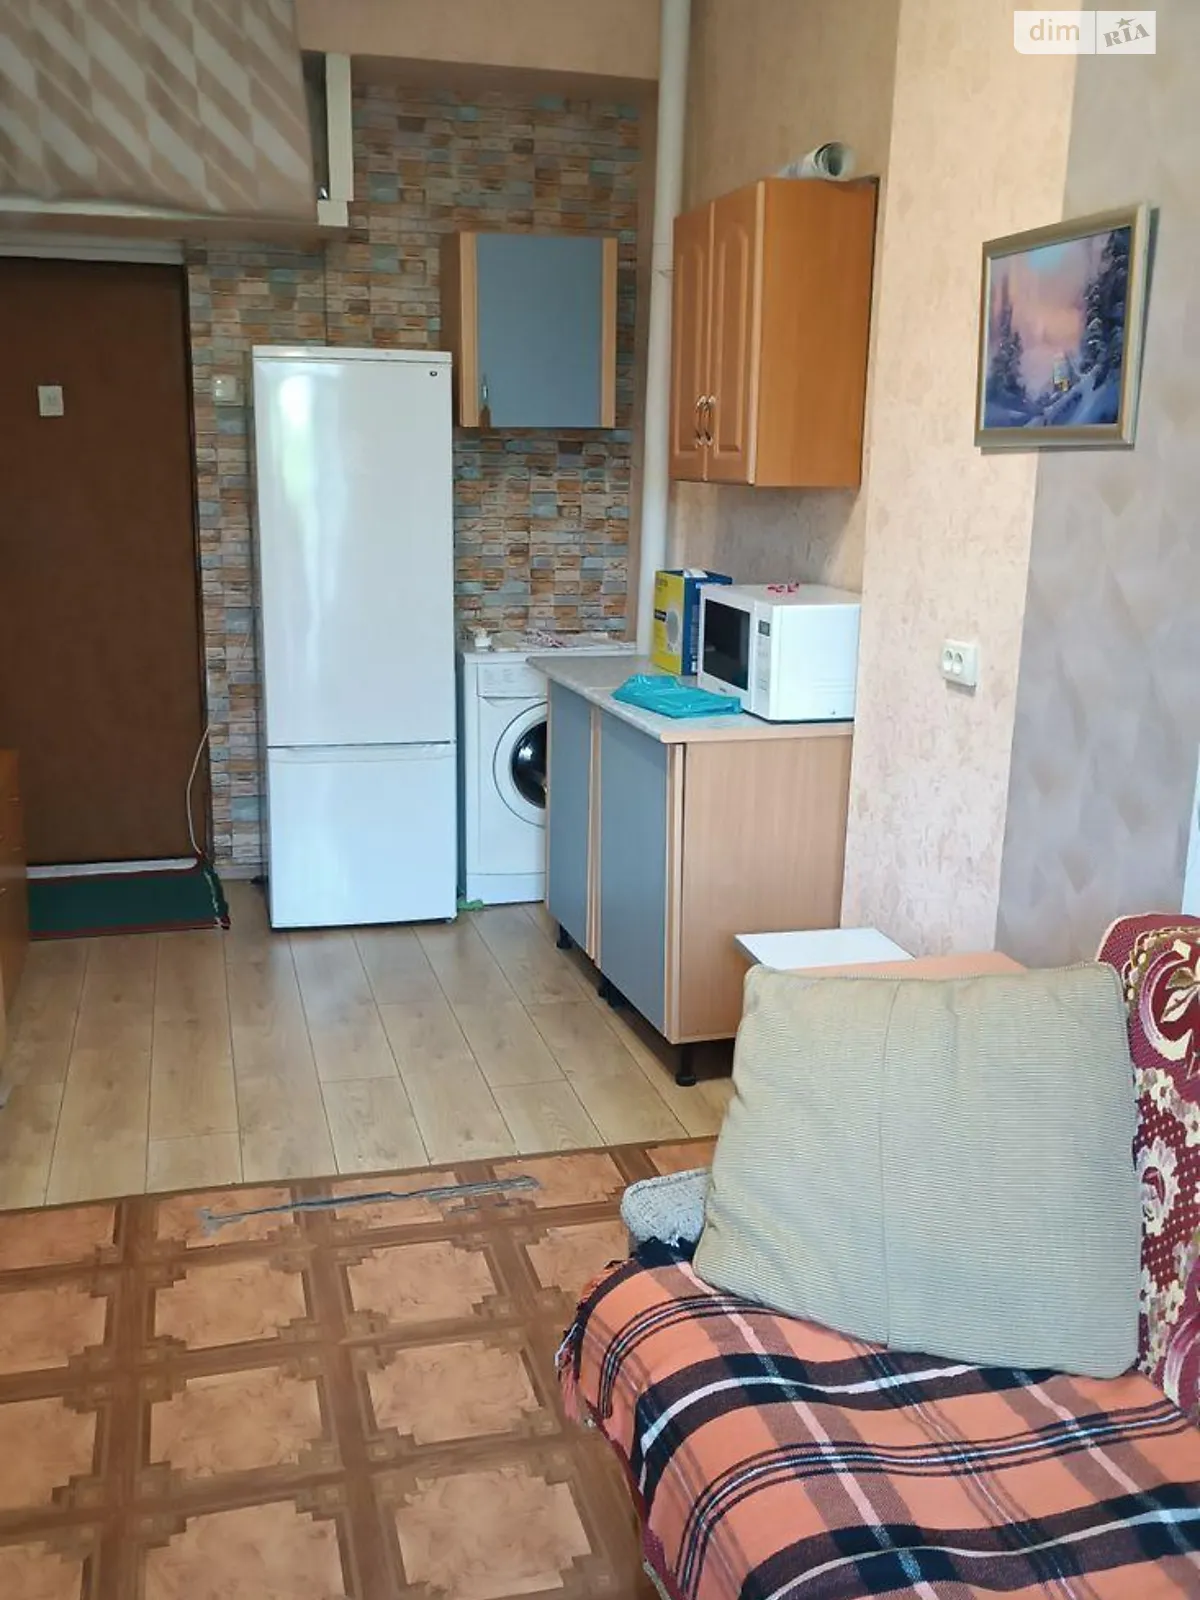 Продается комната 15 кв. м в Киеве, цена: 14700 $ - фото 1